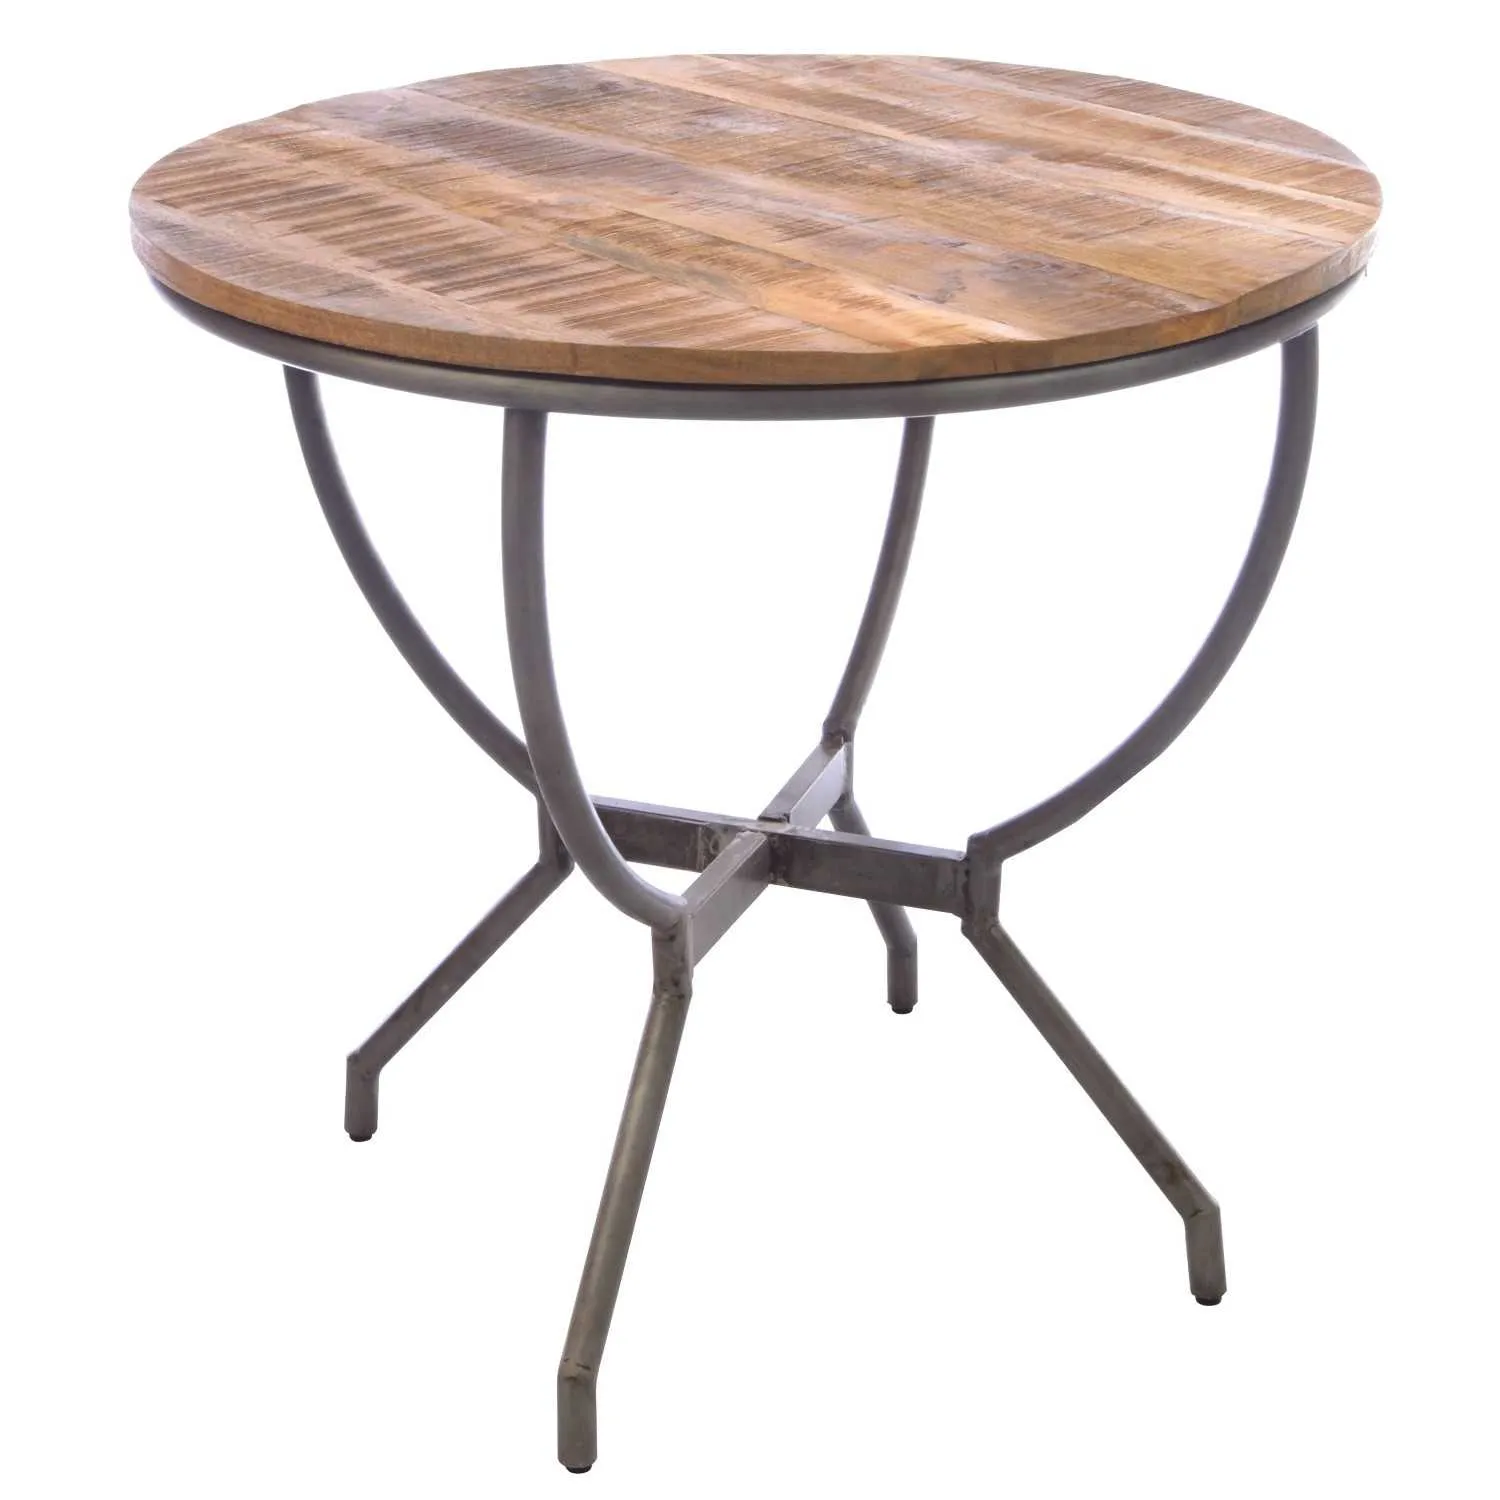 Rustic Wood Round Bistro Dining Table 80cm Diameter